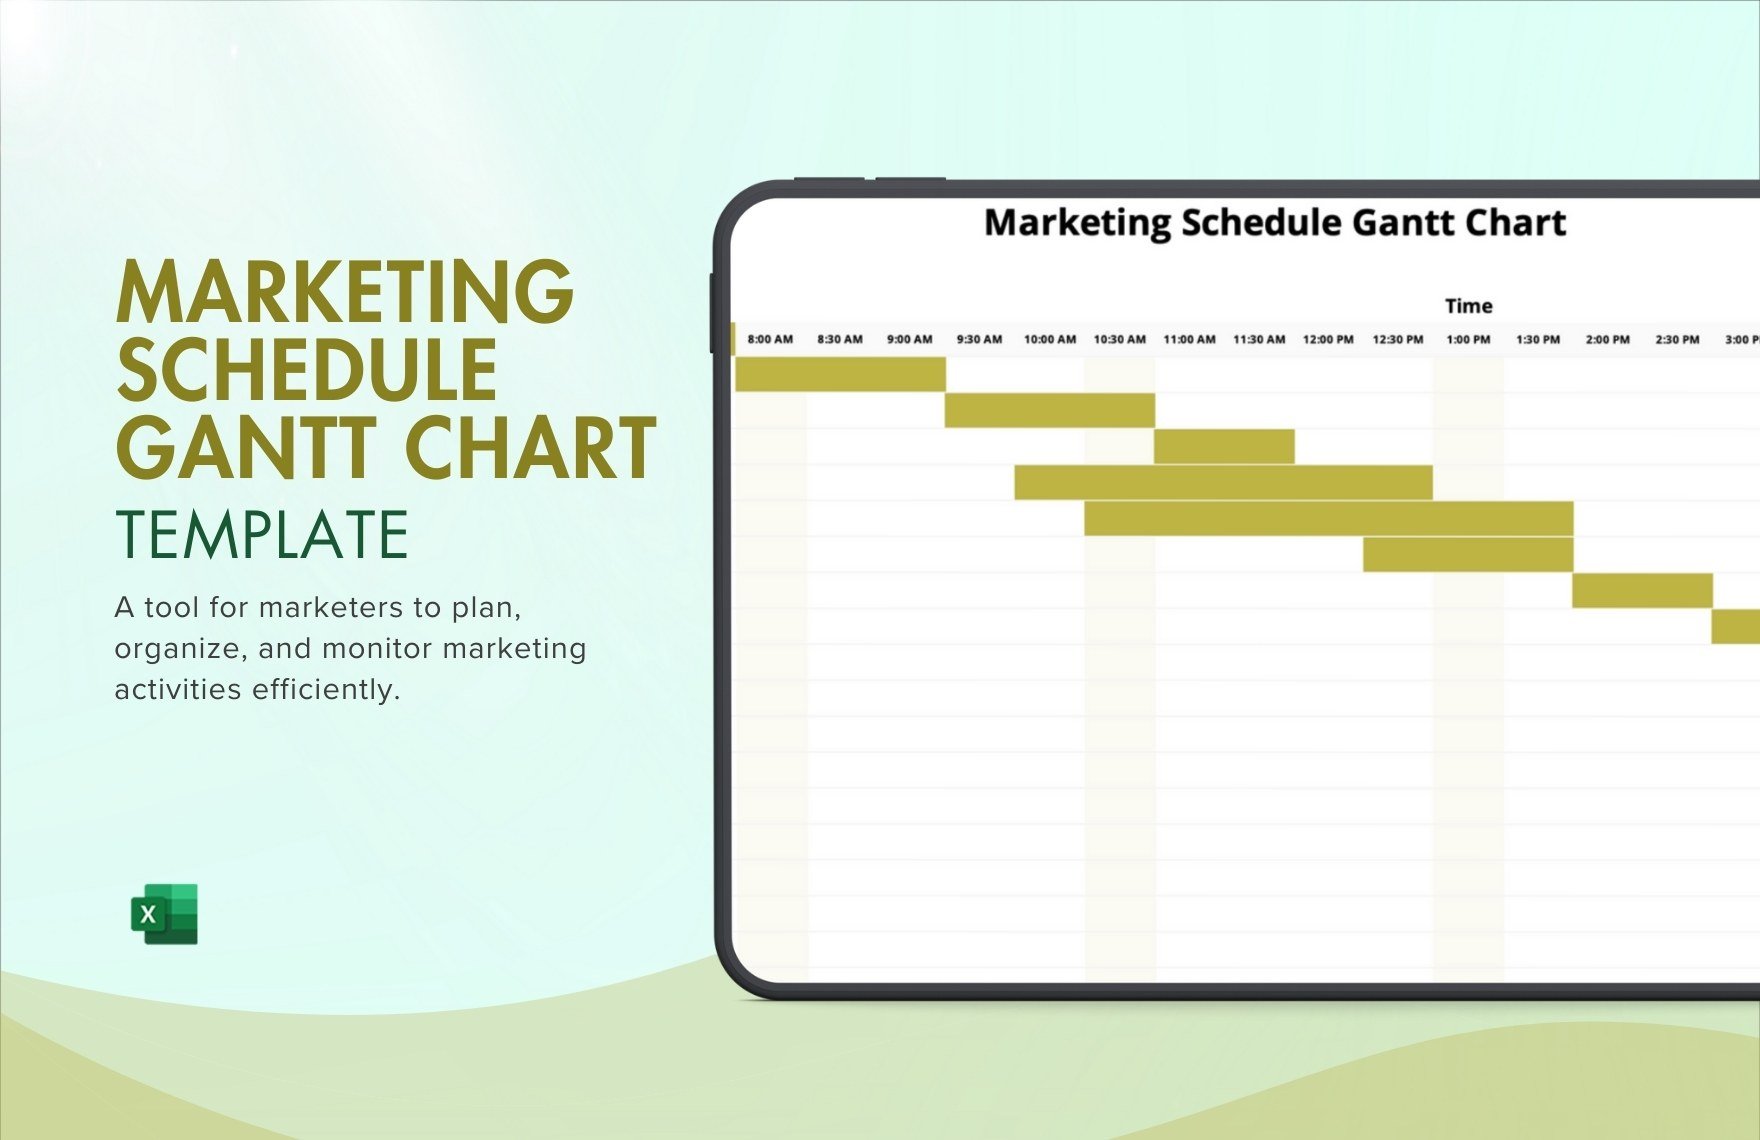 Marketing Schedule Gantt Chart Template in Excel